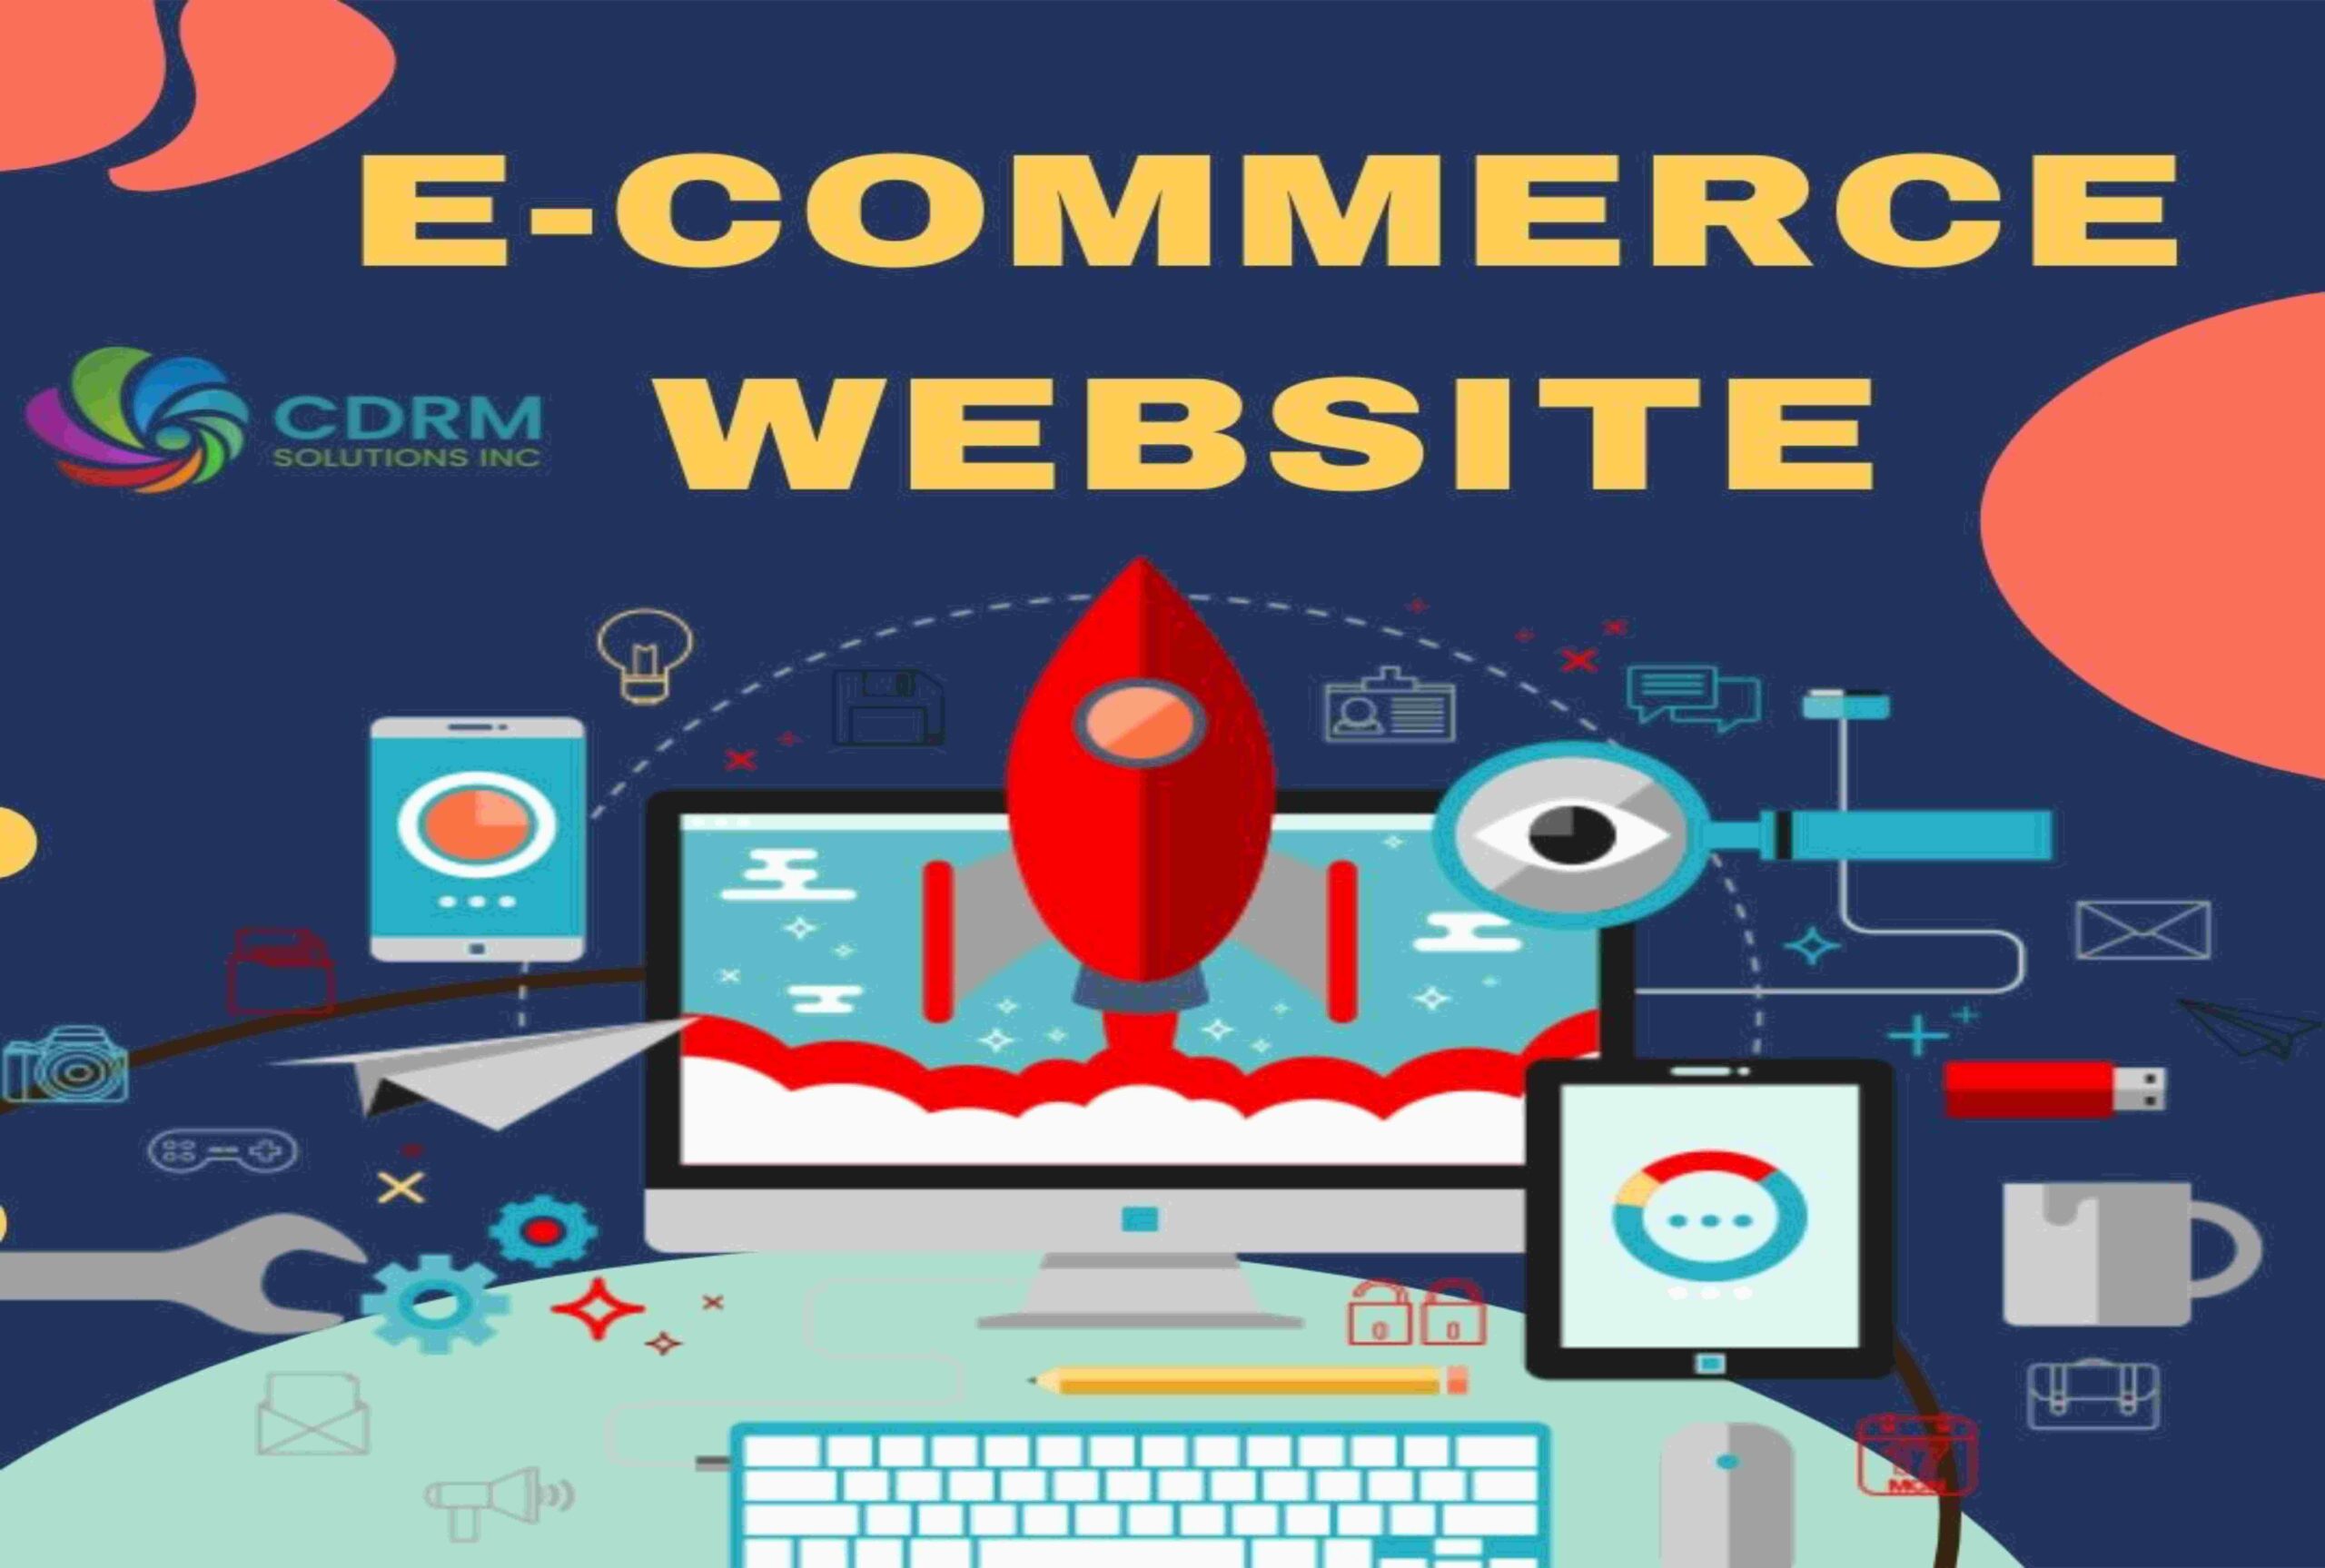 Benefits of E-Commerce Website